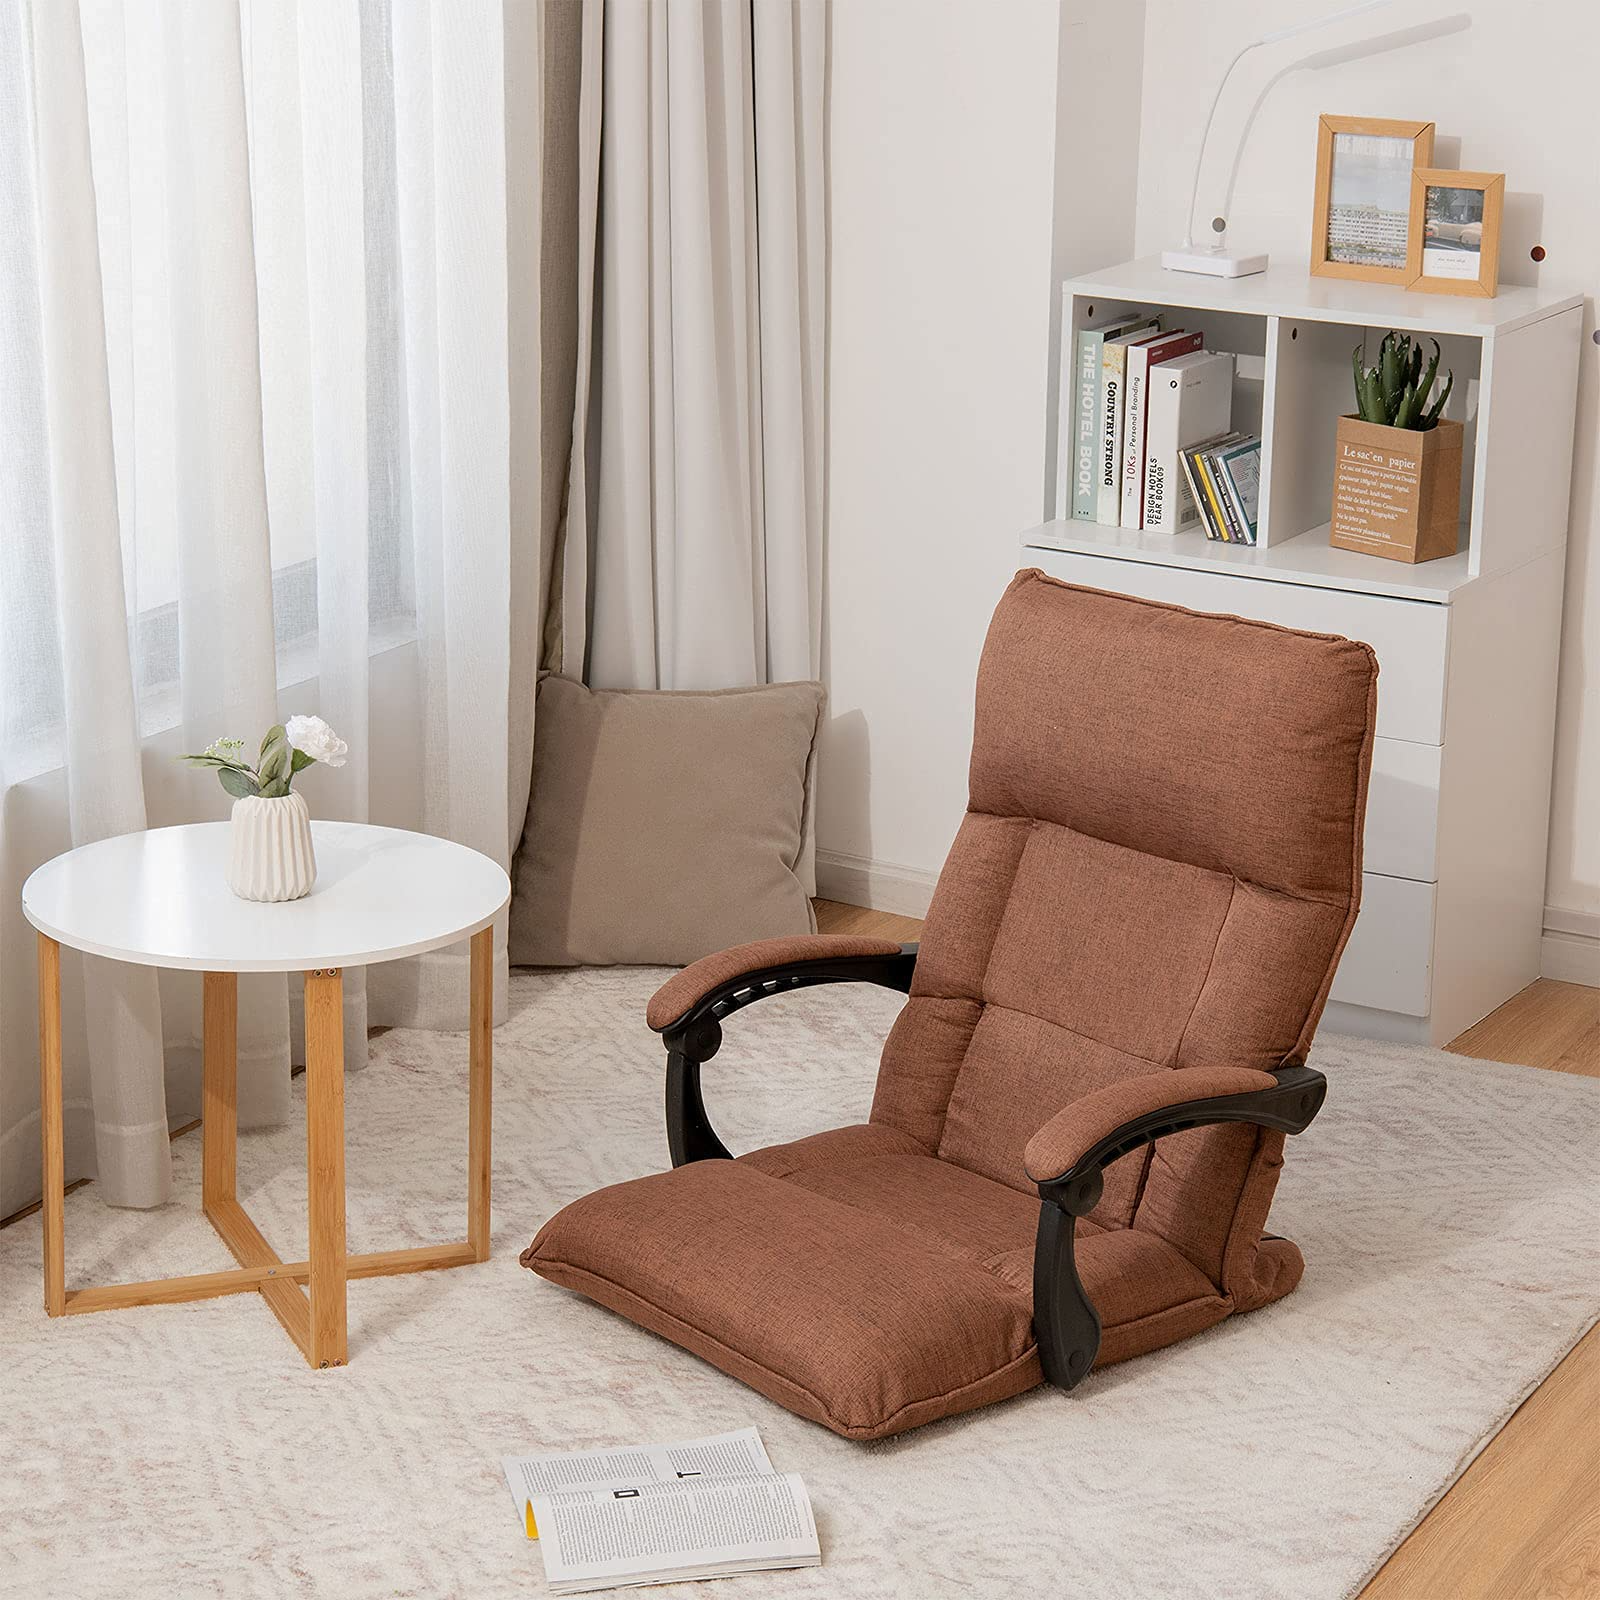 Giantex Adjustable Floor Chair Lazy Sofa Chair 14-Position Adjusting Backrest Headrest Waist Pillow